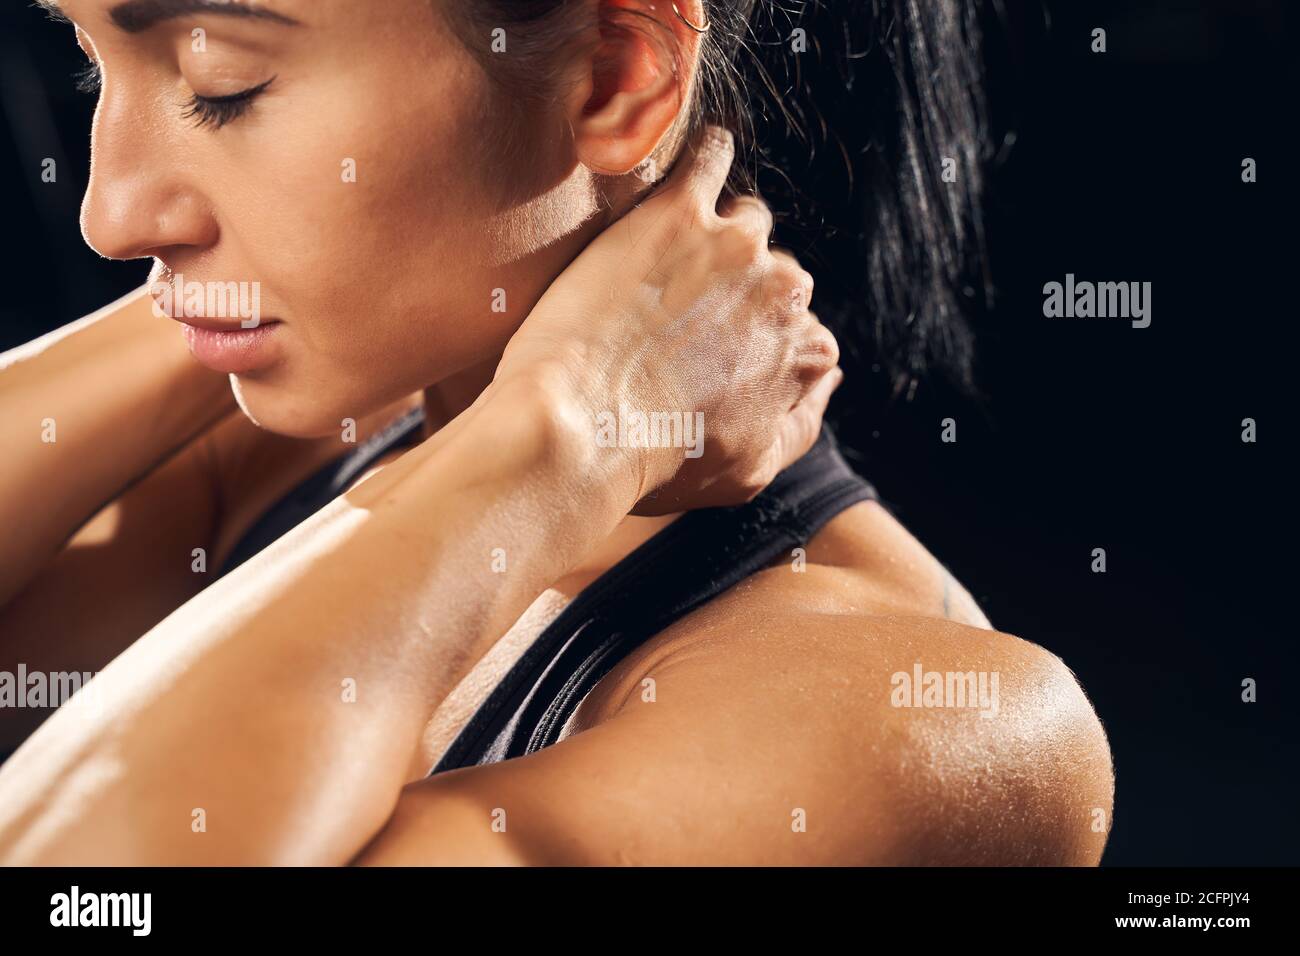 Young female athlete feeling neck muscle soreness Stock Photo